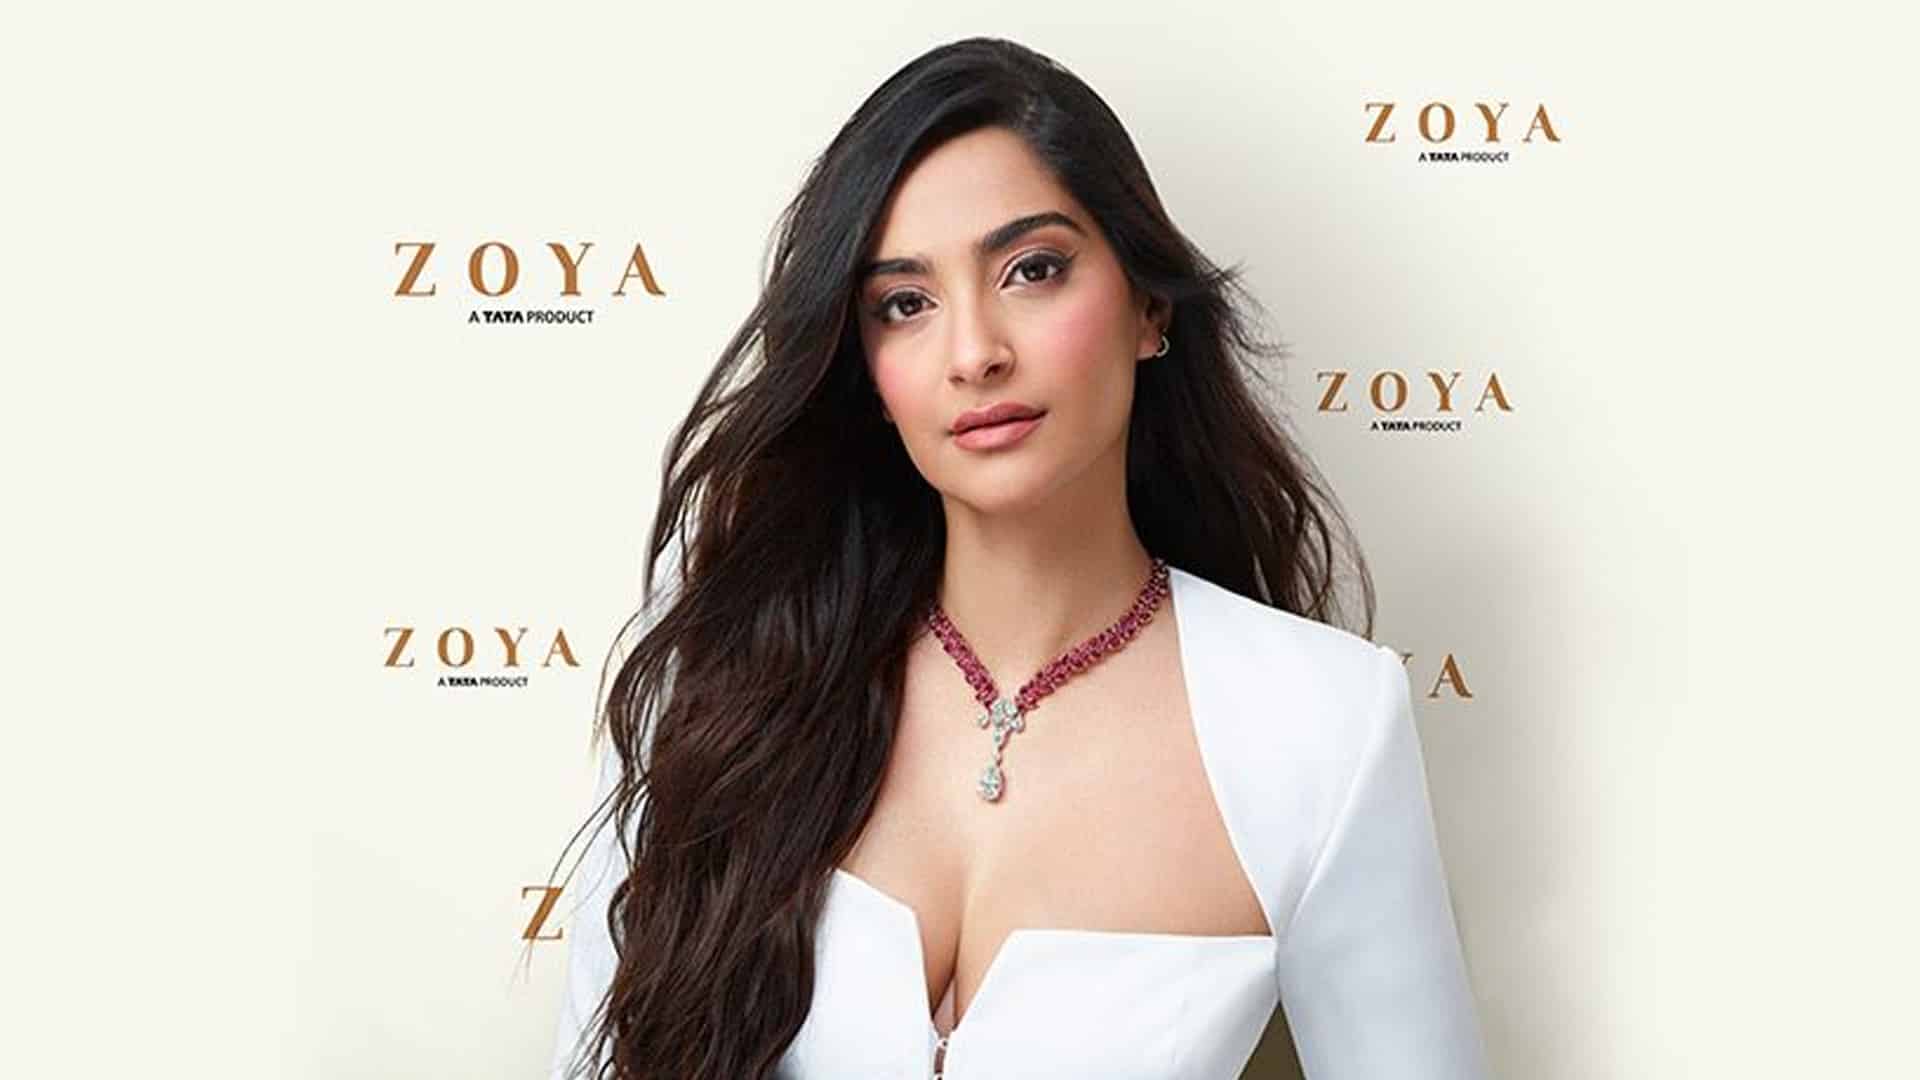 Luxury Diamond Atelier Zoya, from the House of Tata, Welcomes Sonam Kapoor as Brand Ambassador